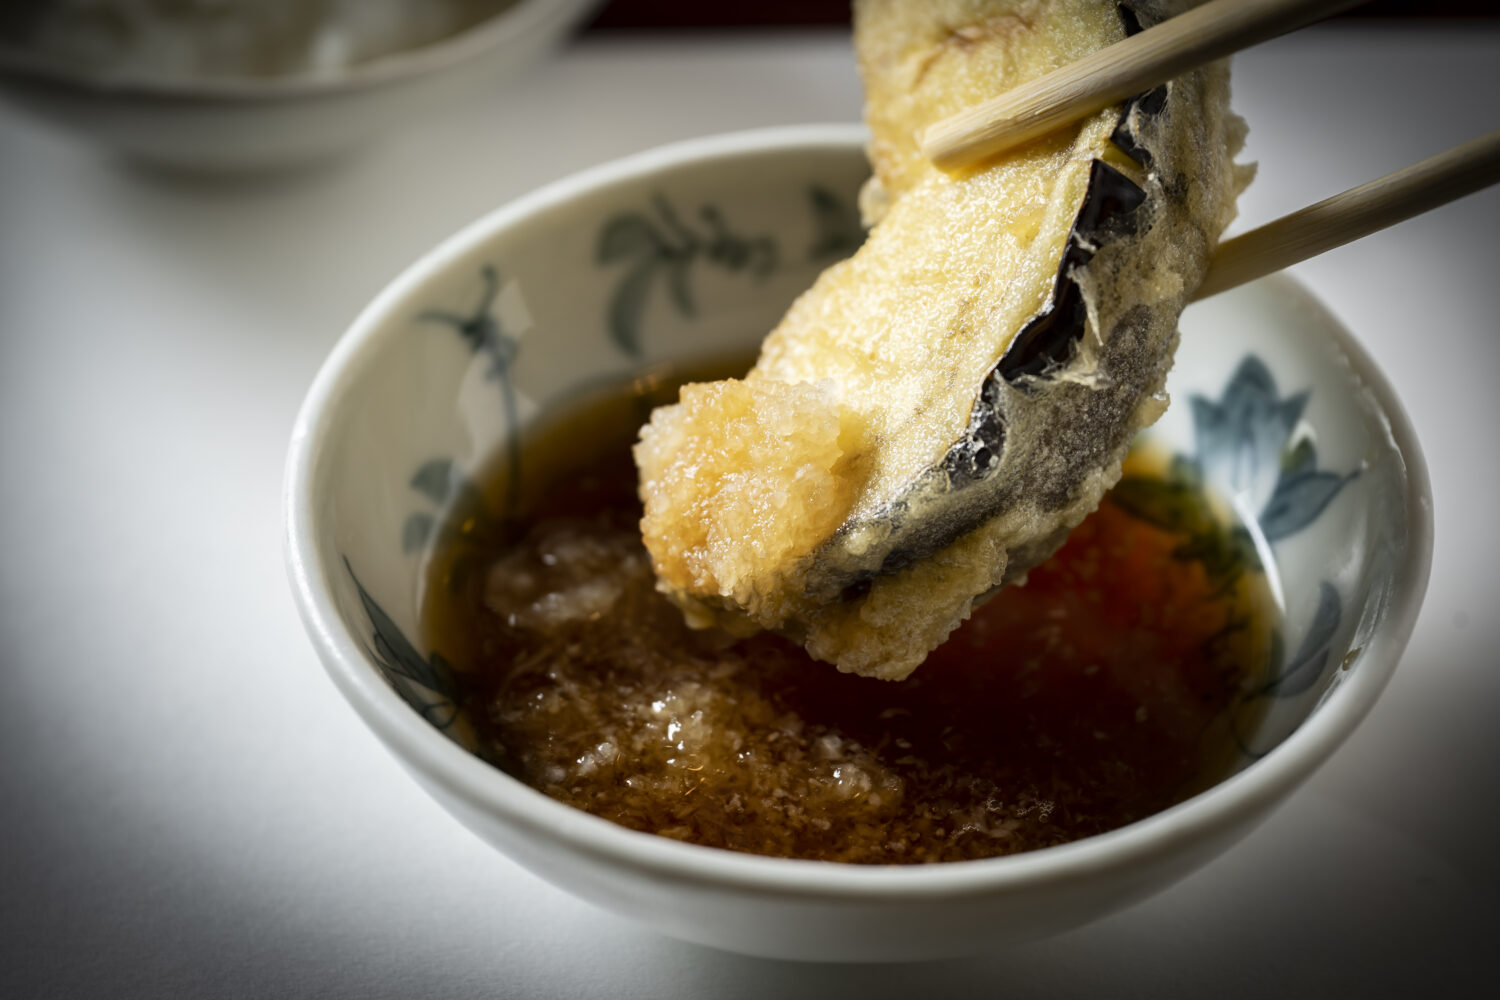 Using condiments: shio (salt), tentsuyu (tempura dipping sauce), and lemon